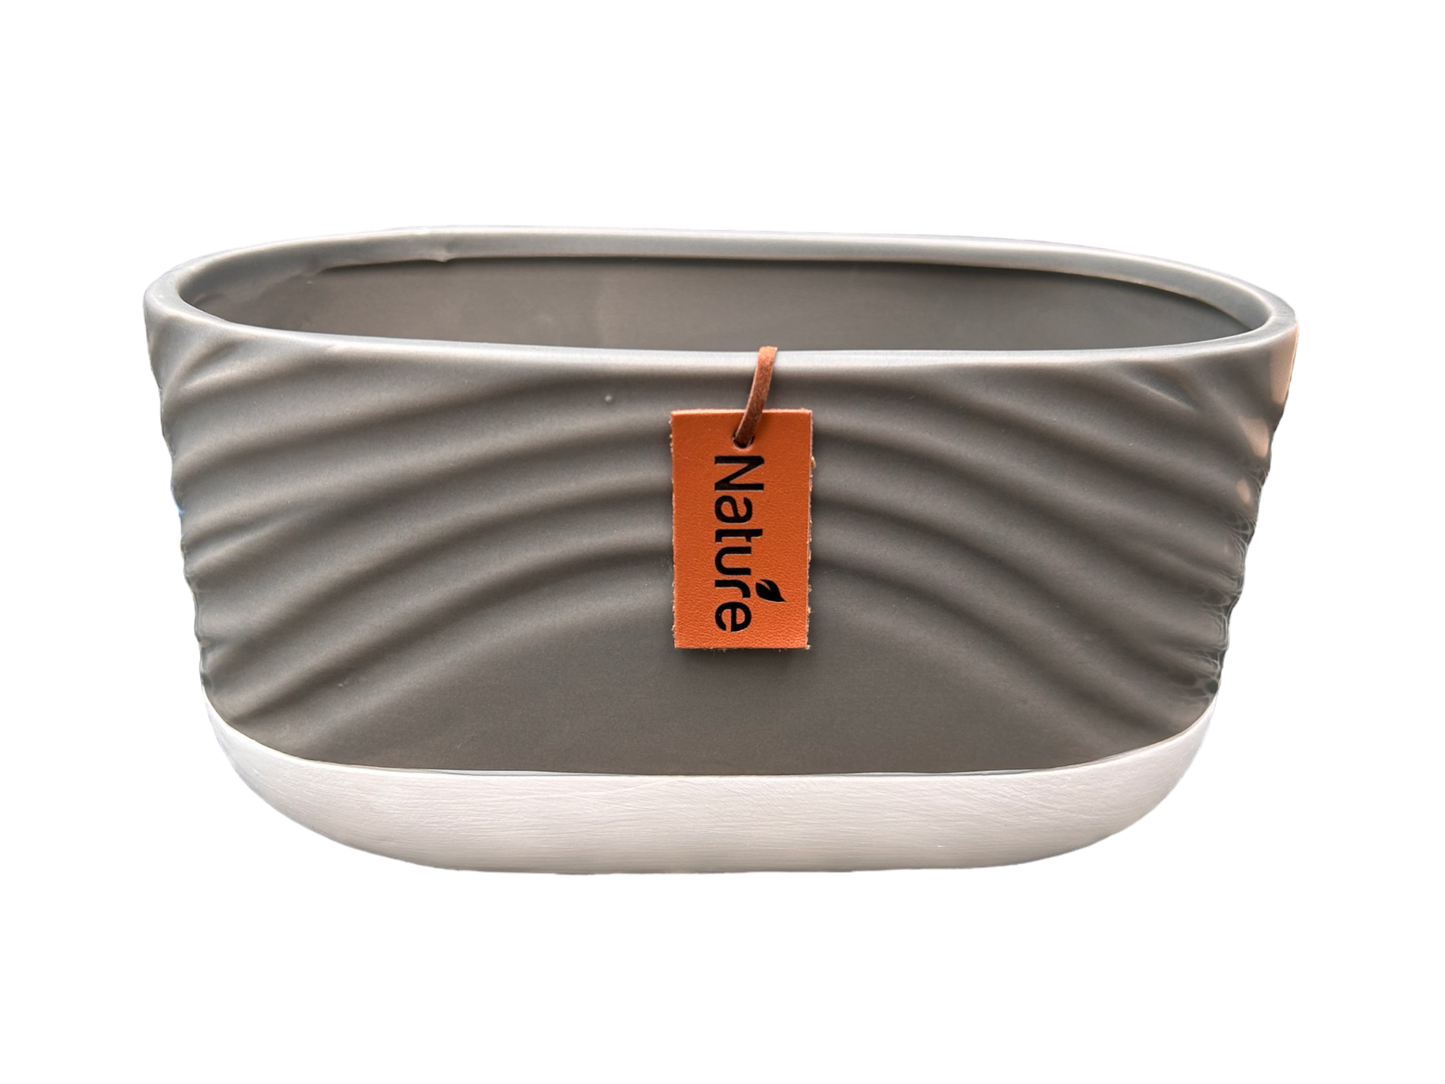 Grey with white base pot